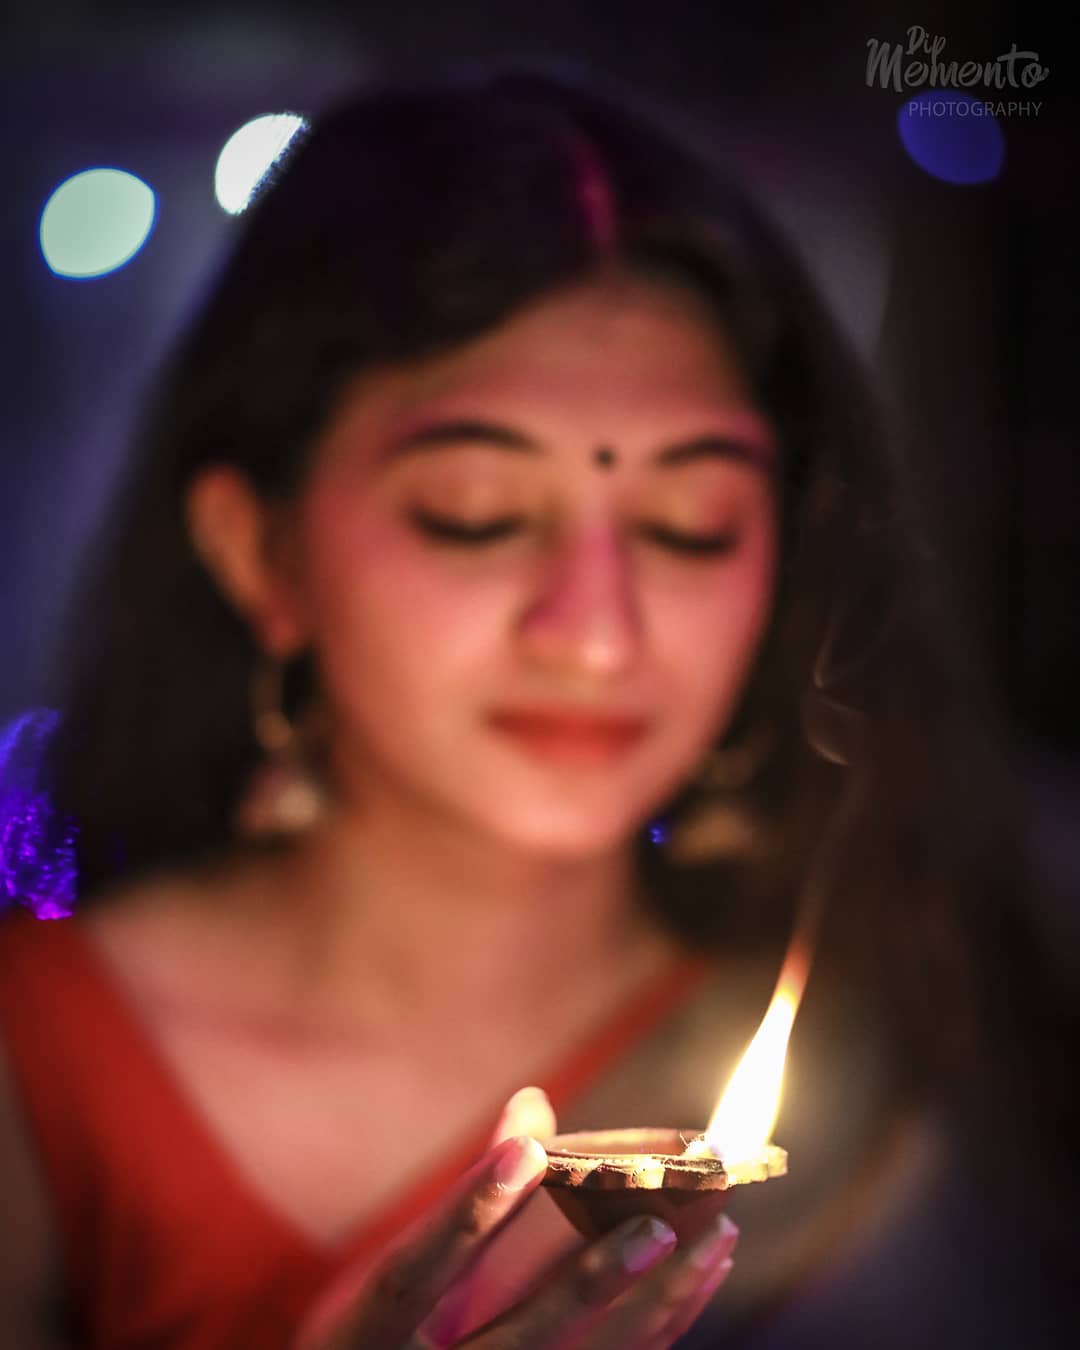 Mandatory shot of Diwali.
.
.
When it was all about lights and lamps and Diyas❤️ 💕
.
Face : @vedikaaaa.s
📷: @dip_memento_photography
Shot using @canon5dmark4
Lens: 85mm f1.8
Shutter speed: 1/640. ISO: 50
Light source: Godox HSS
Concept by- @komalpatel_16
.
.
.
.
.
.
#portraits_ig
#portraits_mf #portraitvision #portrait_vision
#marathigirl #portrait_mood #marathimulgi
#phototagit #agameofportraits #portraitsmag
#portraitfromtheworld #tradition
#pursuitofportraits #saree #sareeaddict
#mightydreamers #earth_portraits #rsa_portraits #dipmementophotography
#9924227745  #sareelovers #traditional_look
#sareefashion
 #diwali2020 #moodyports
#instamaharashtra #diwali

@official_photographers_hub @portraitsofficial
@modelzgalery @mumbai.portraits @sigmaphotoindia
@creative_portraits @photographers.of.india
@sadakchap @canon_photos @canonindia_official
@portraitsofficialmodels
@saree_angelss
@saree_culture_
@photographers.of.india
@indian.portraits.official